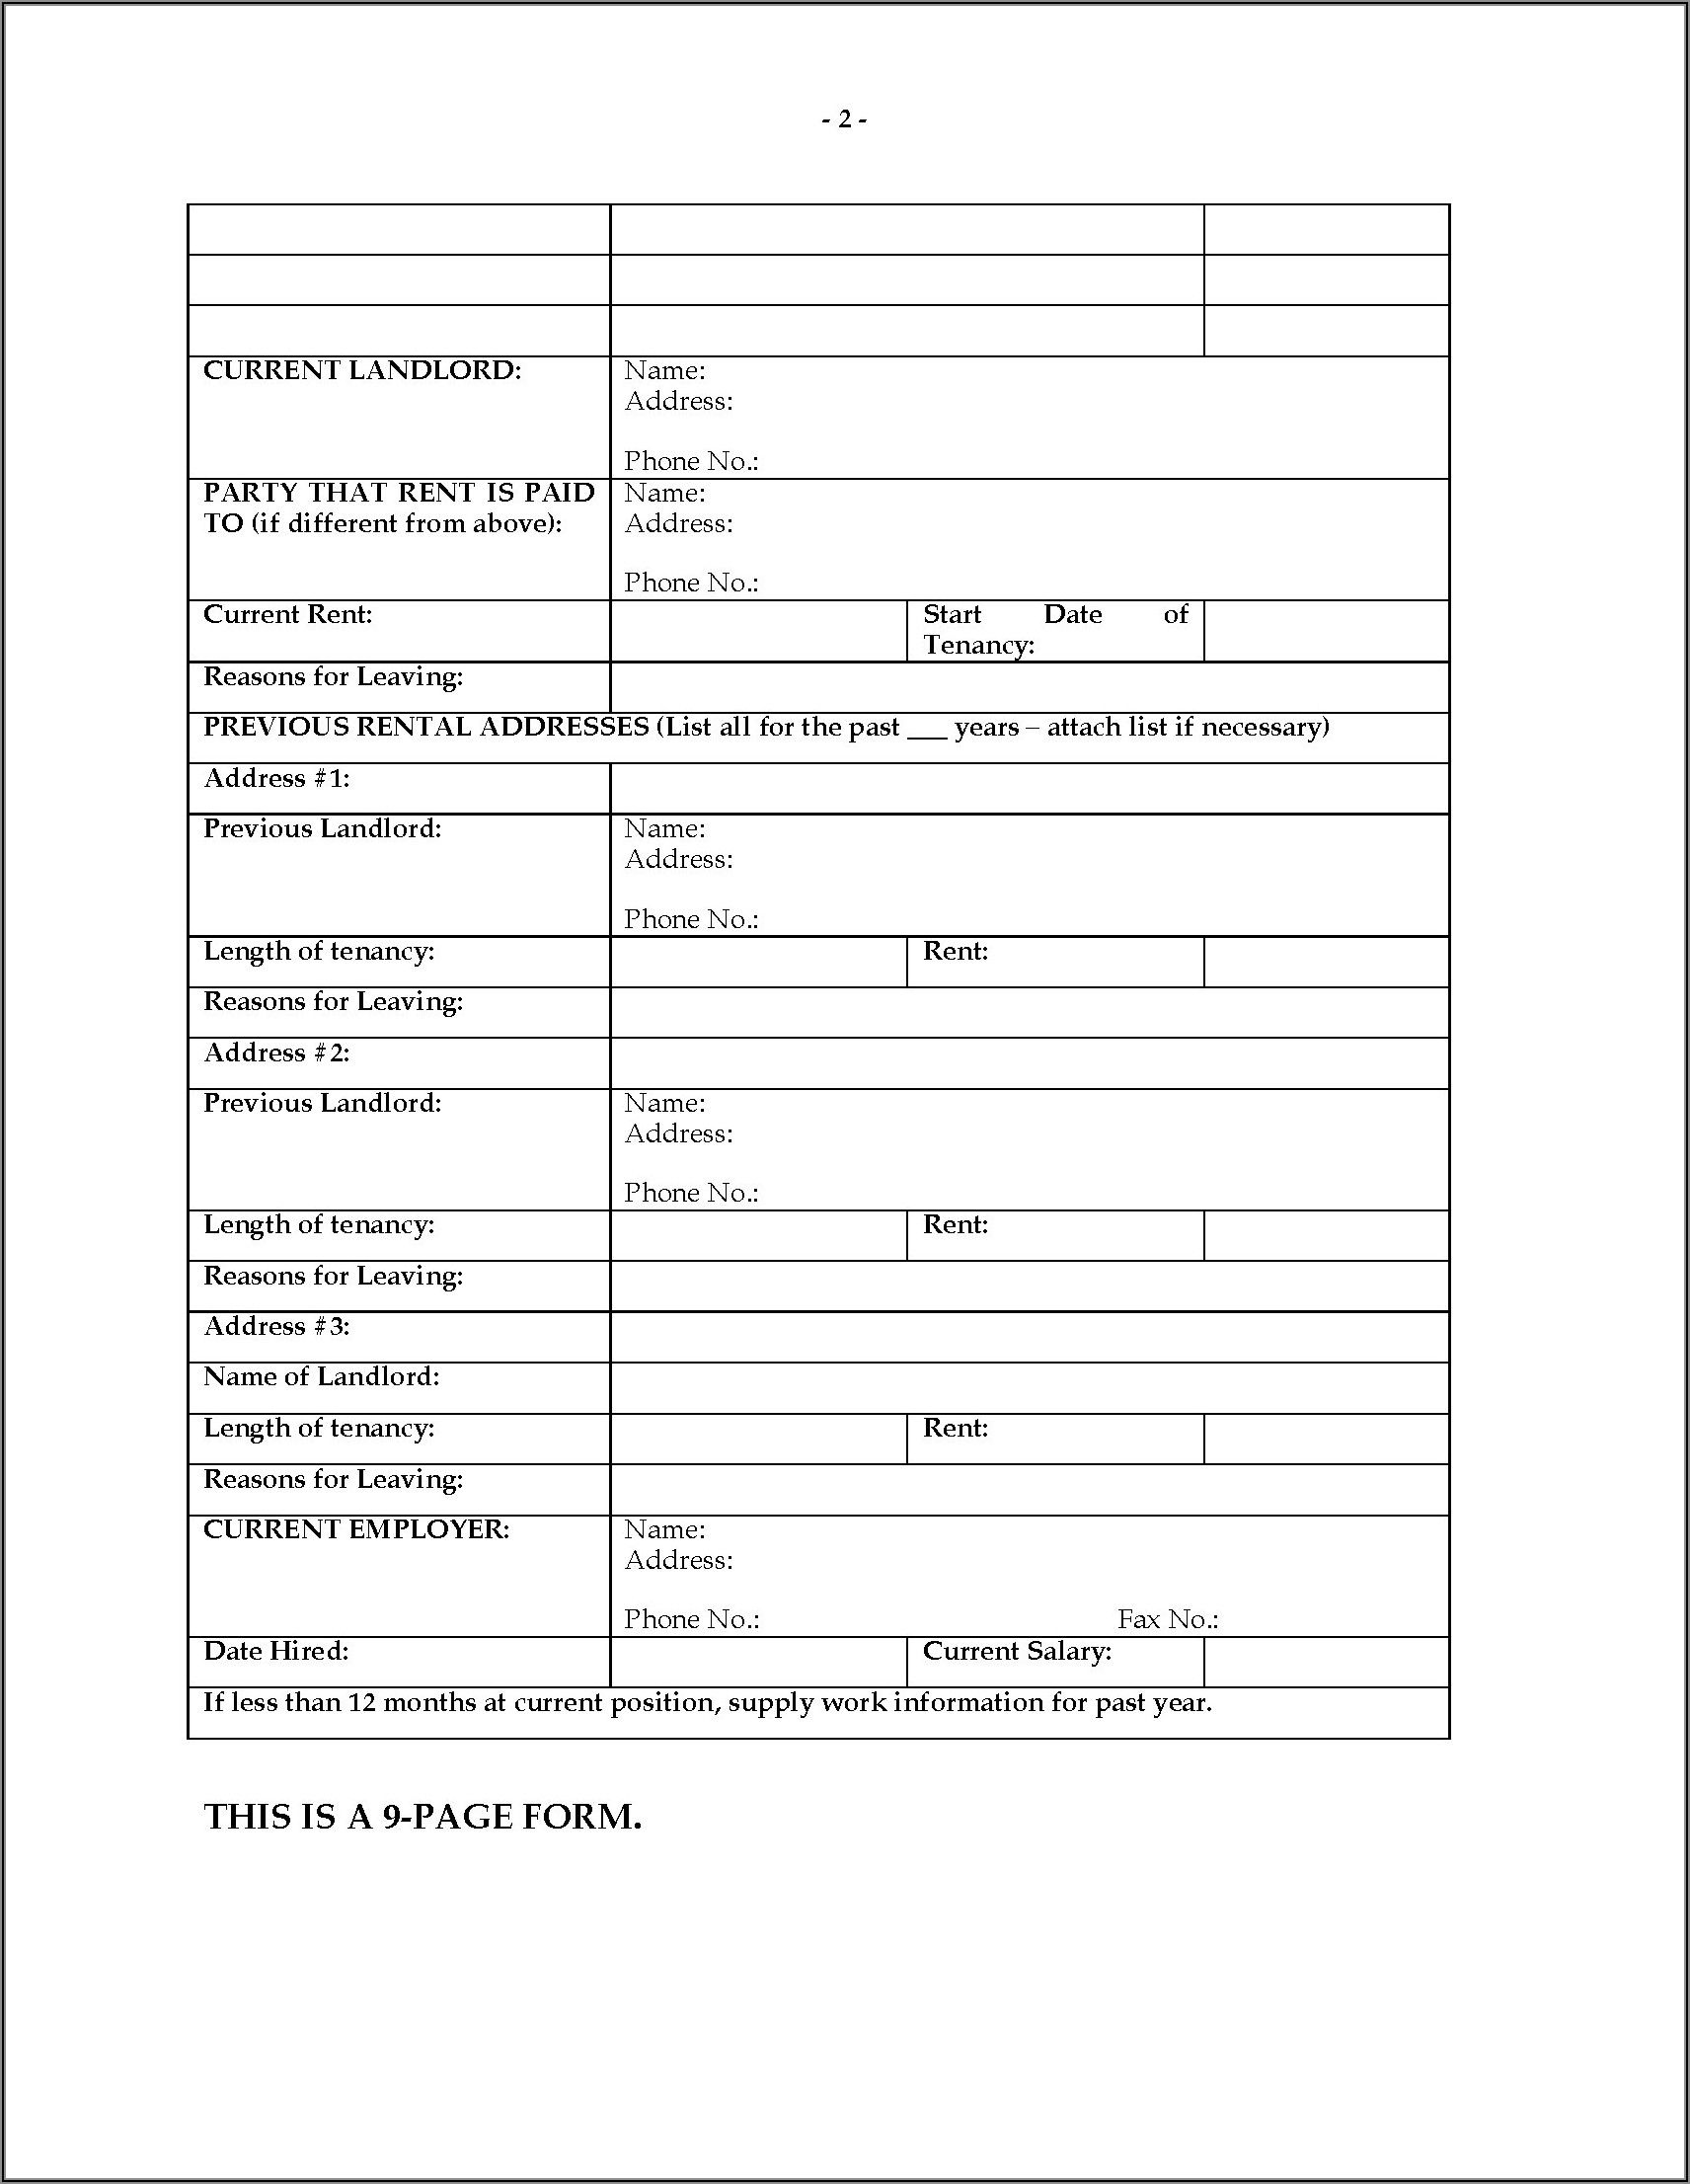 Ontario Landlord Rental Application Form